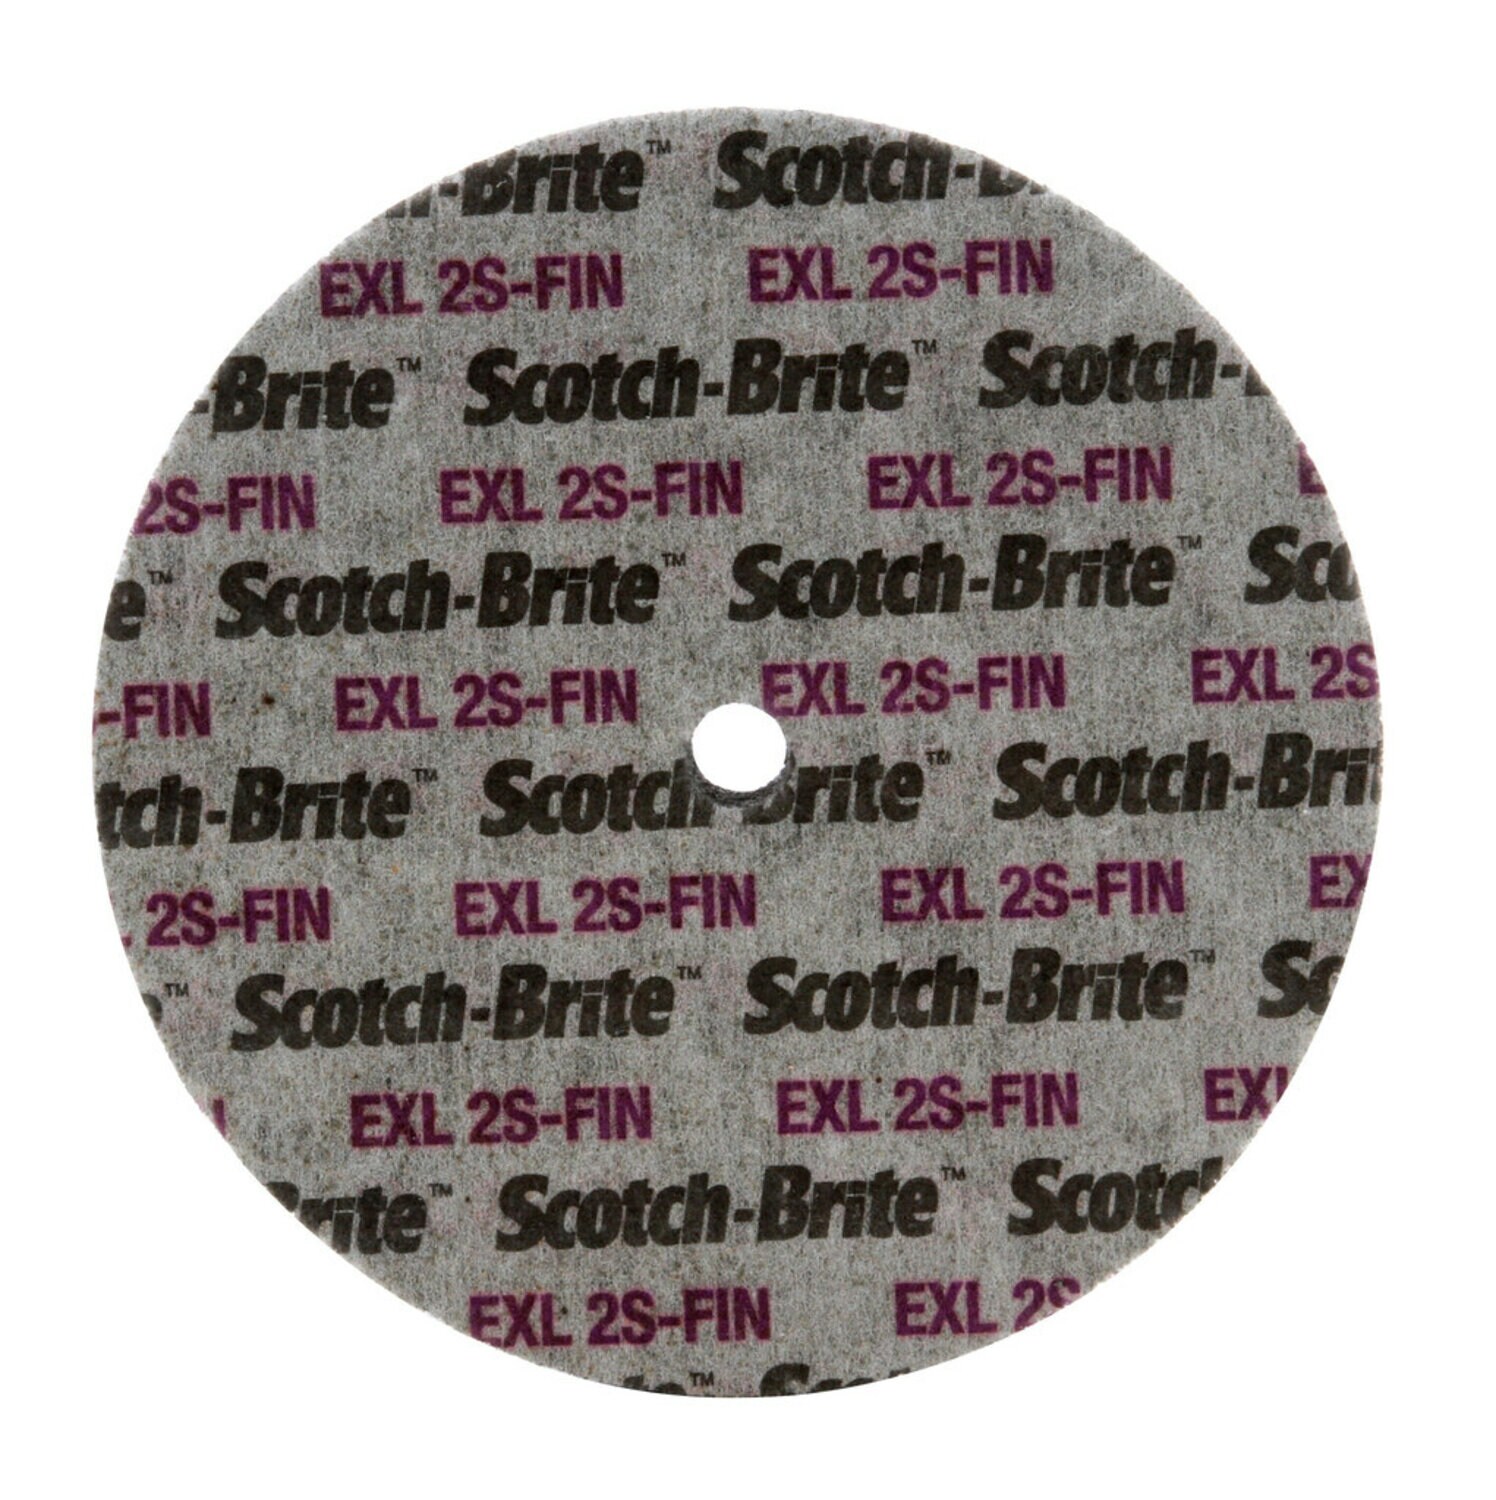 7010366035 - Scotch-Brite EXL Unitized Wheel, XL-UW, 2S Fine, 6 in x 1/2 in x 3/4
in, 4 ea/Case